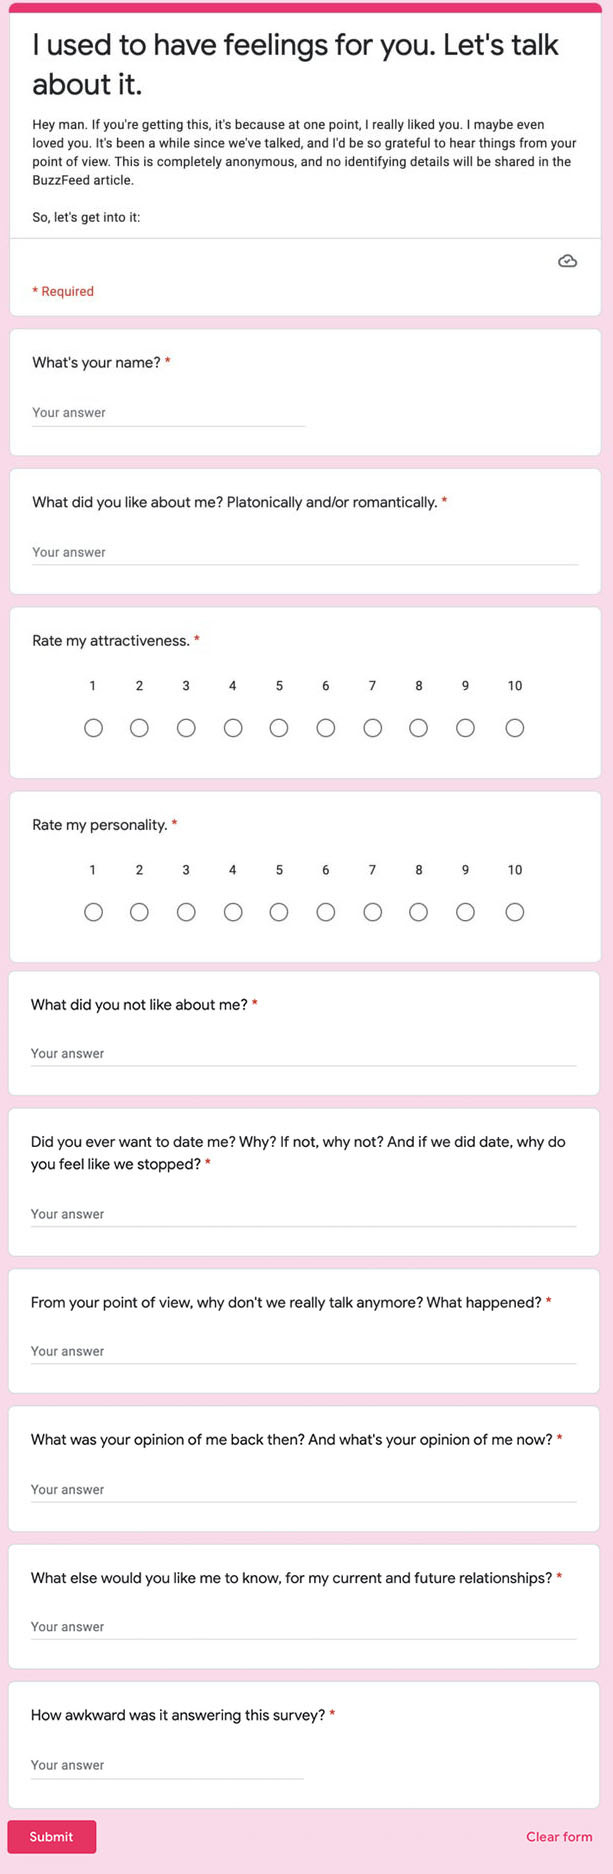 Google form survey